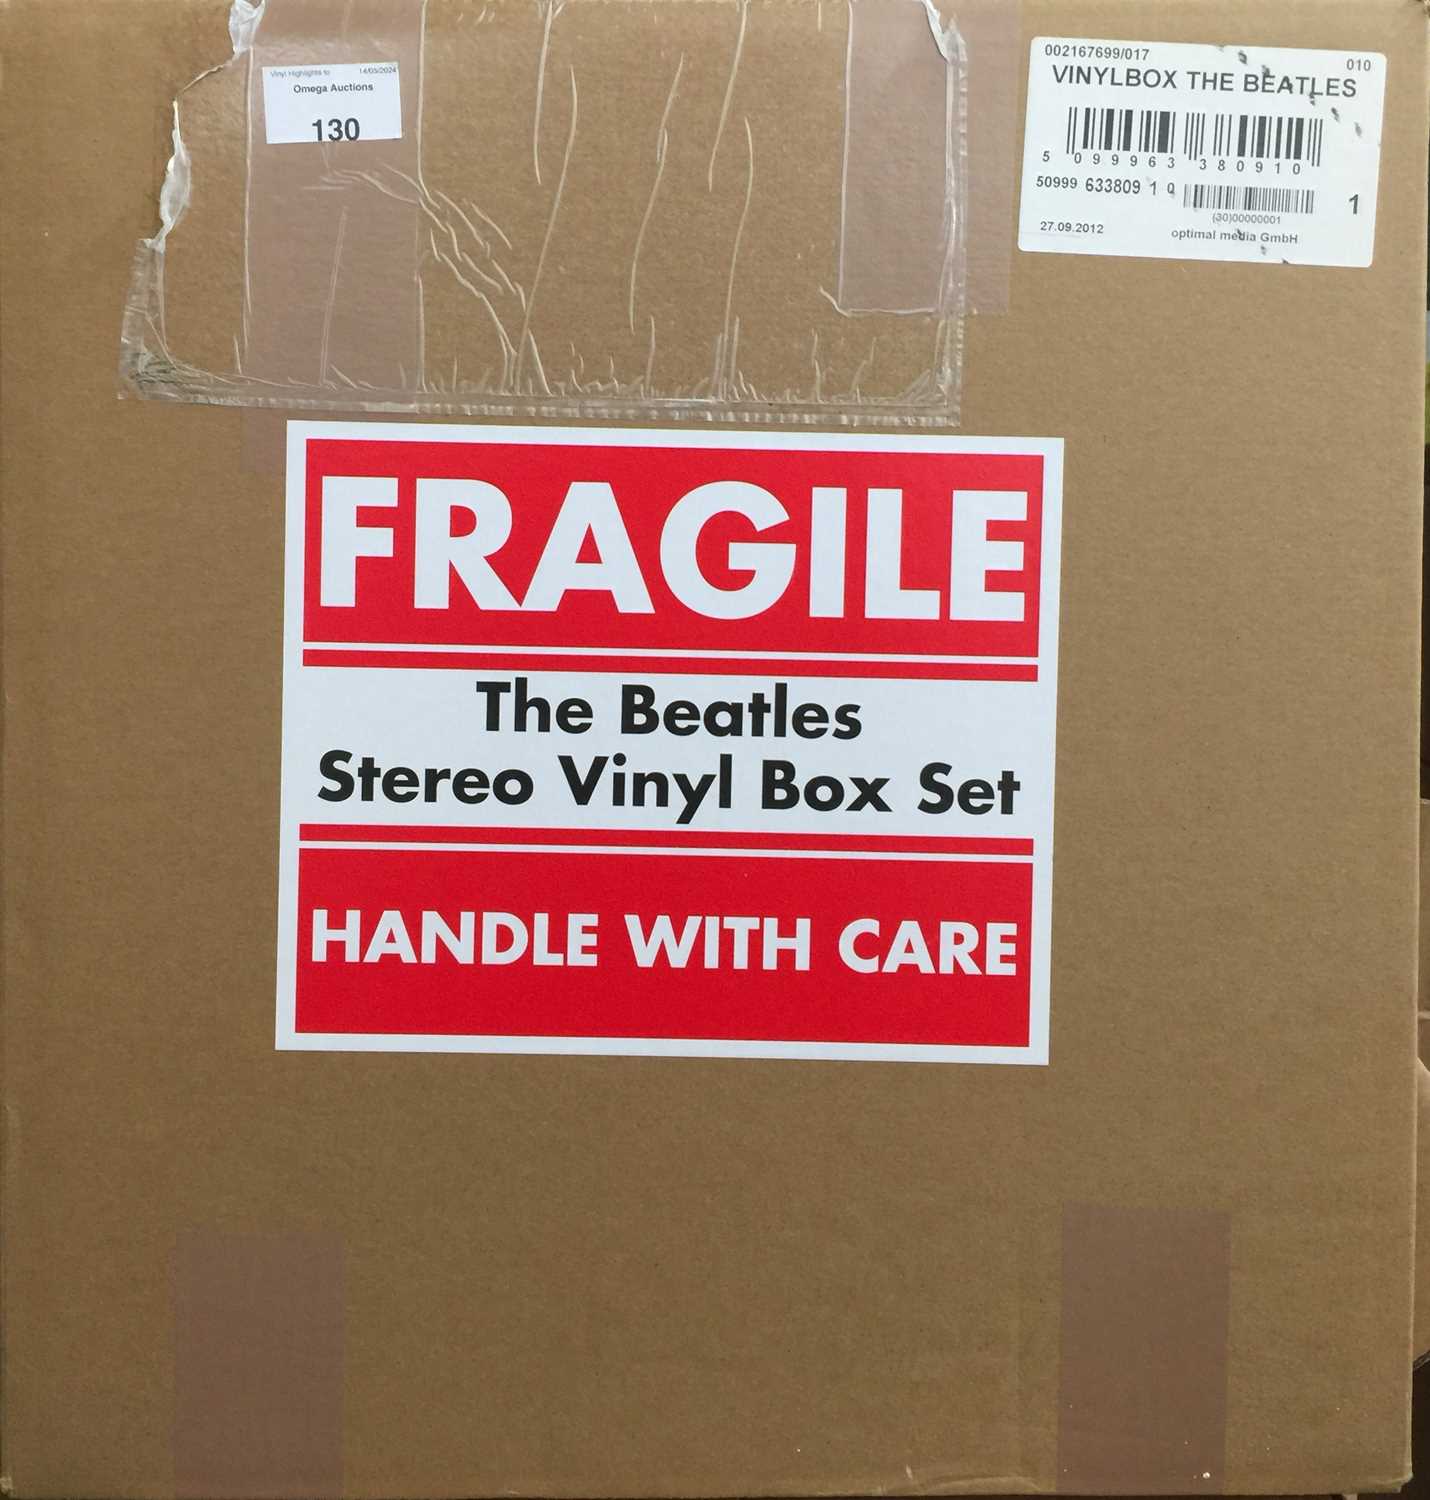 THE BEATLES - THE BEATLES LP BOX SET (14 ALBUM 'ORIGINAL STUDIO RECORDINGS' - 5099963380910)